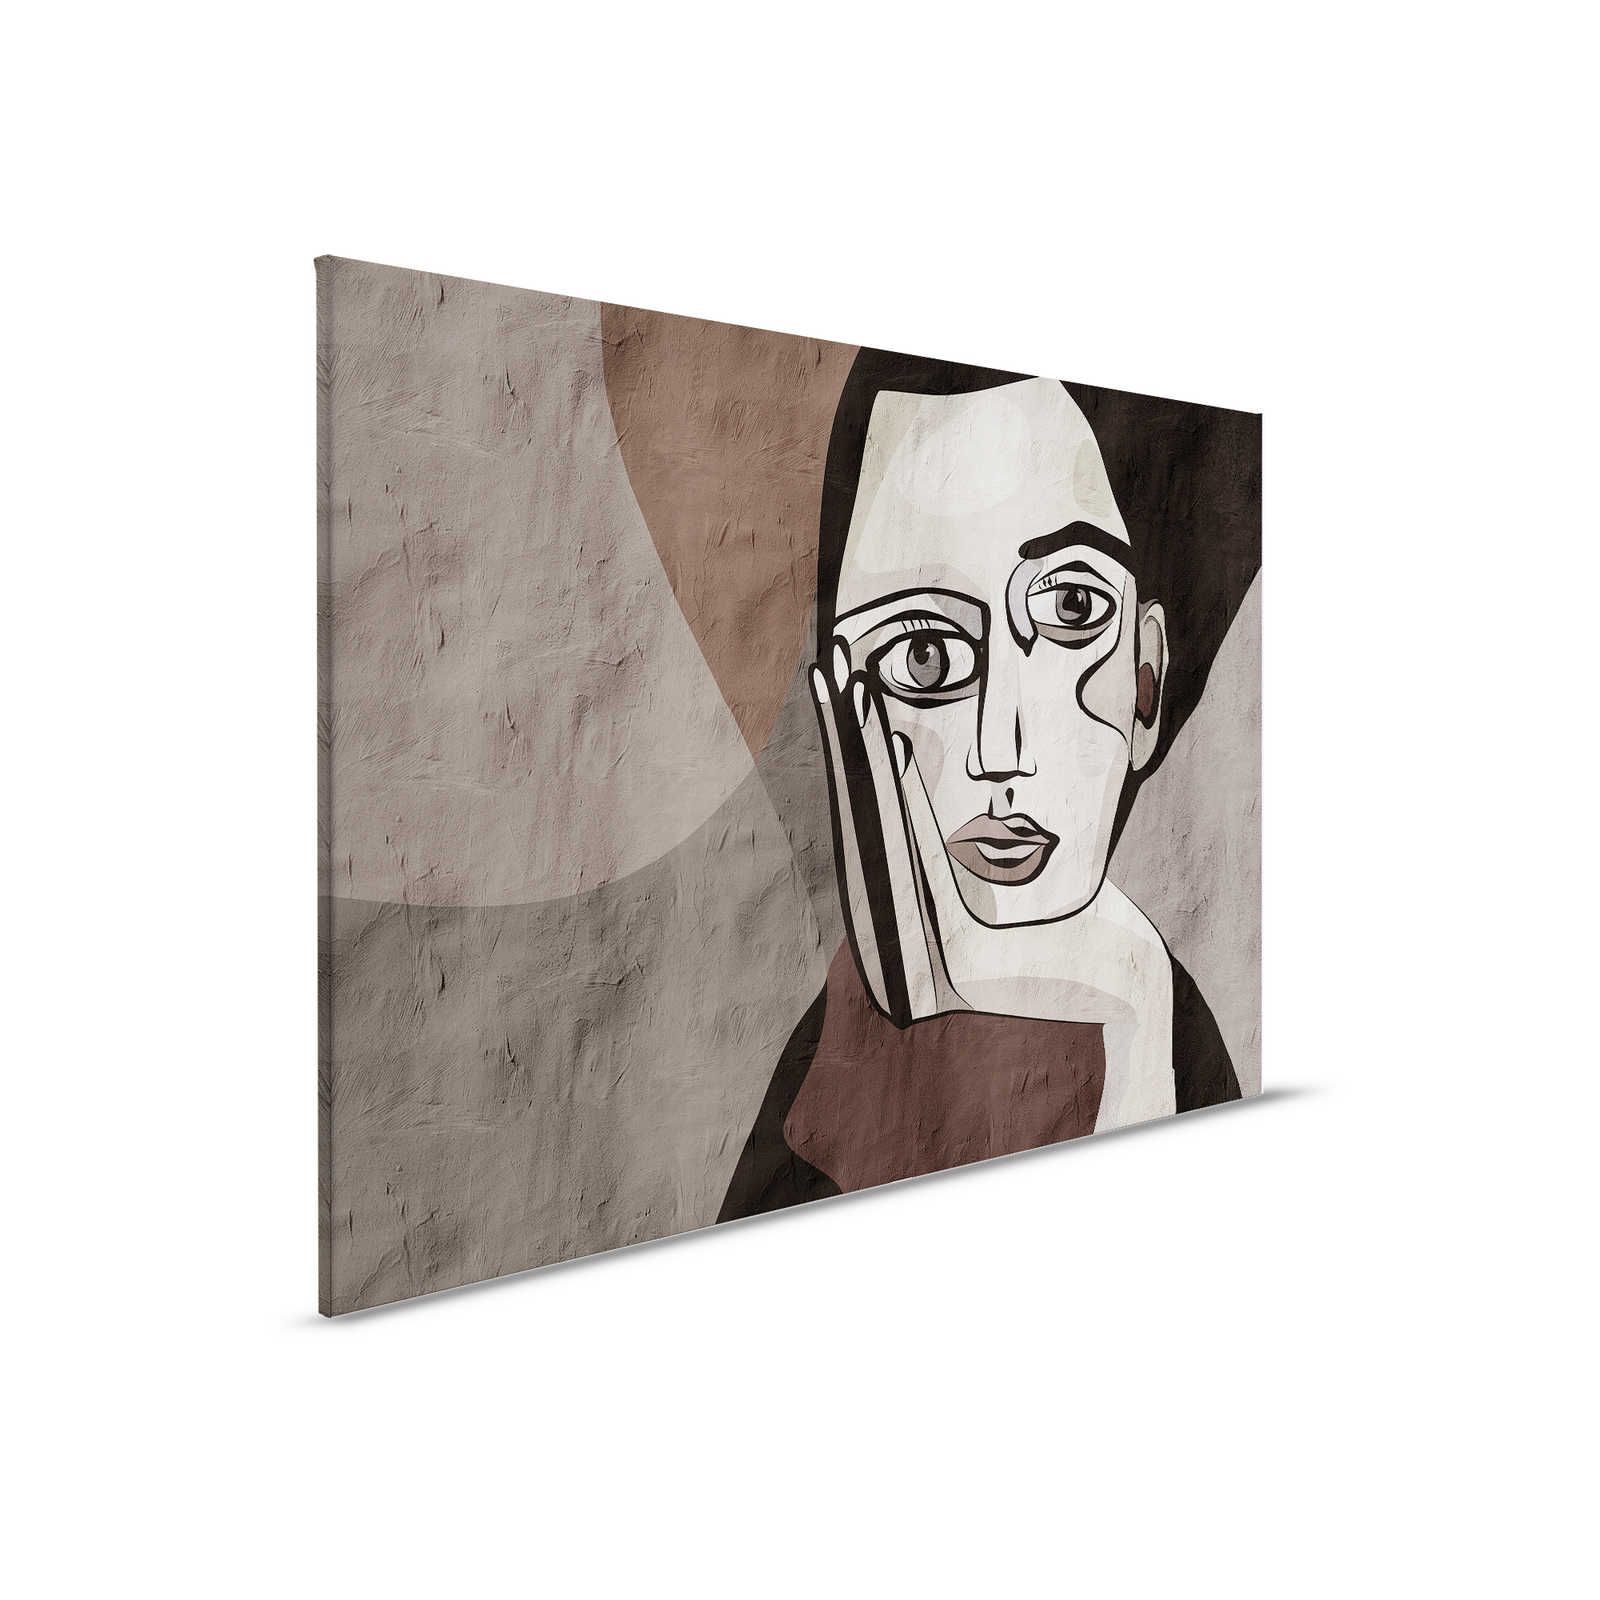         Think Tank 2 - Leinwandbild Graffiti Frauen Gesicht abstrakt – 0,90 m x 0,60 m
    